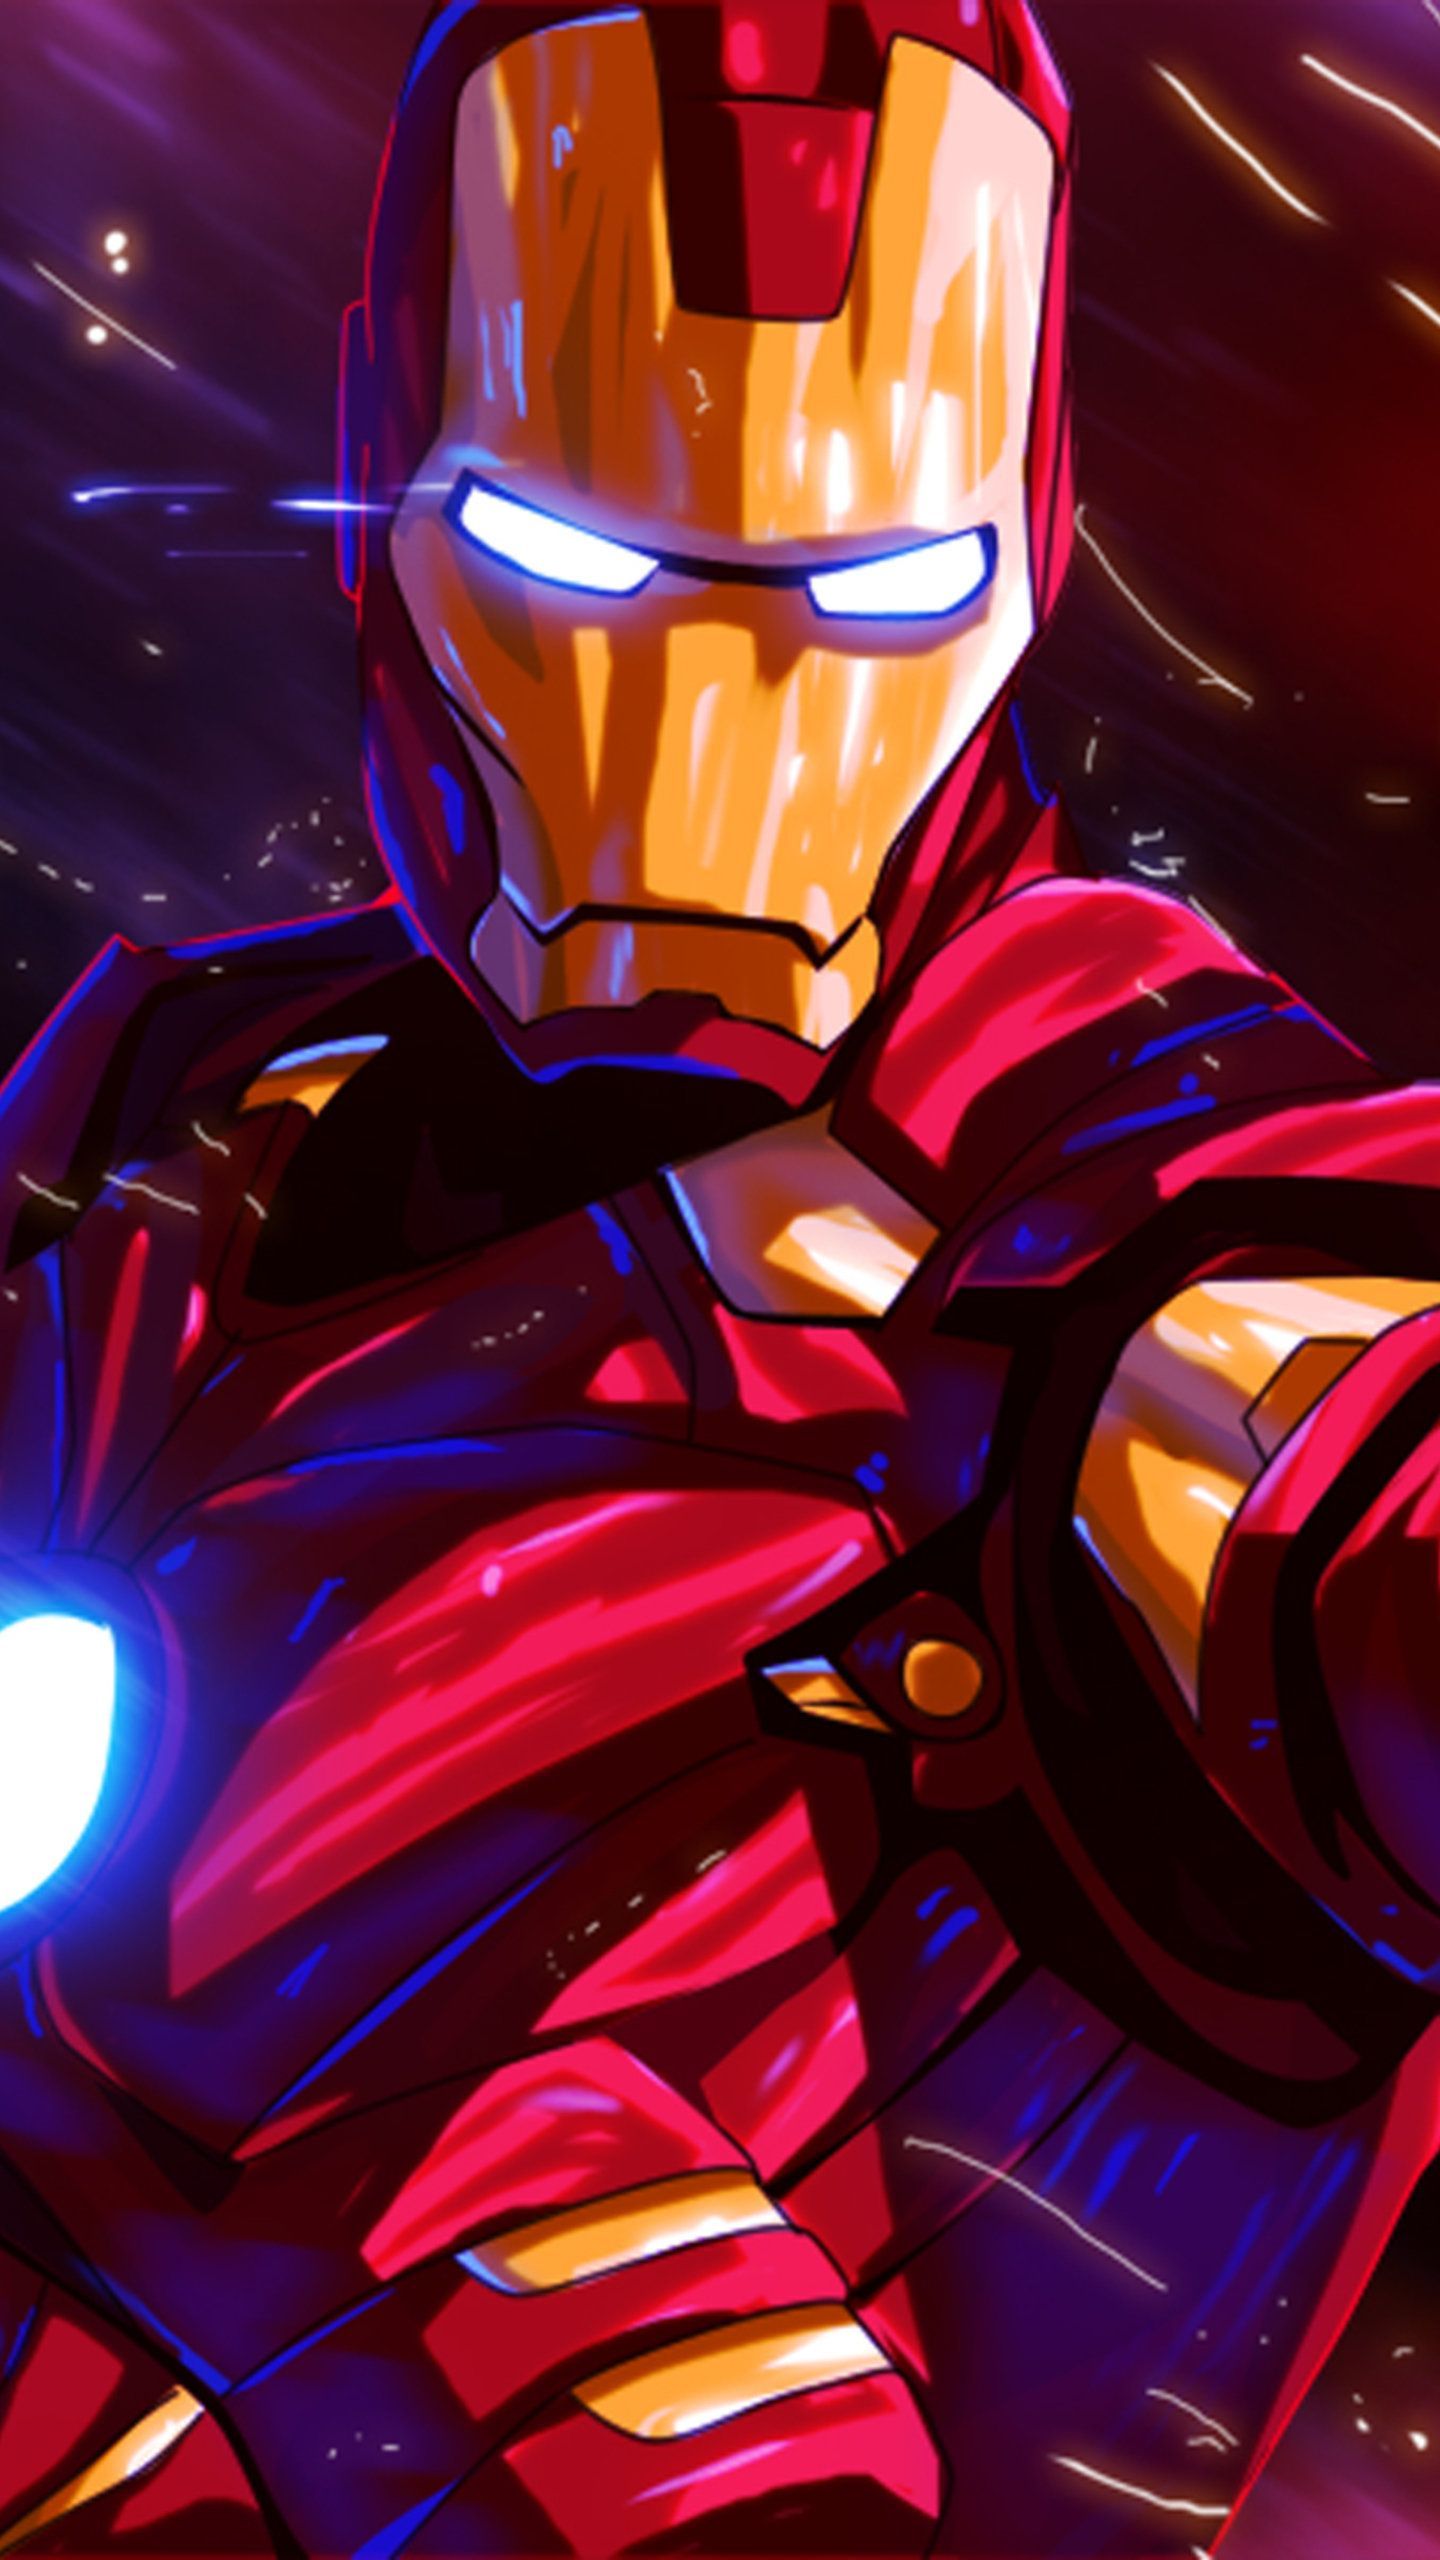 Iron Man Colorful Glowing Art HD Wallpaper. Iron man